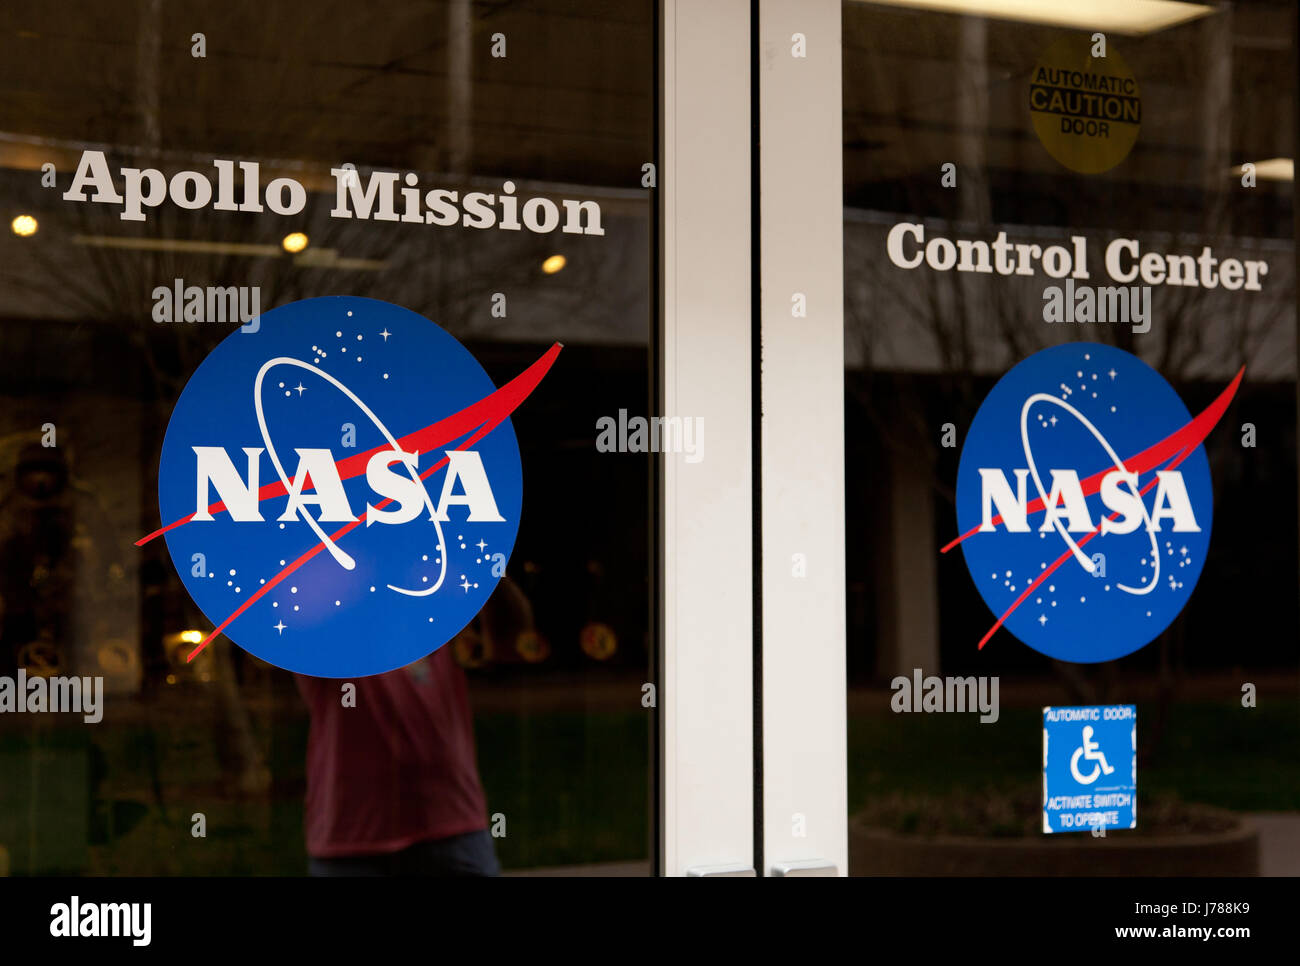 NASA Apollo mission control building with logo Stock Photo